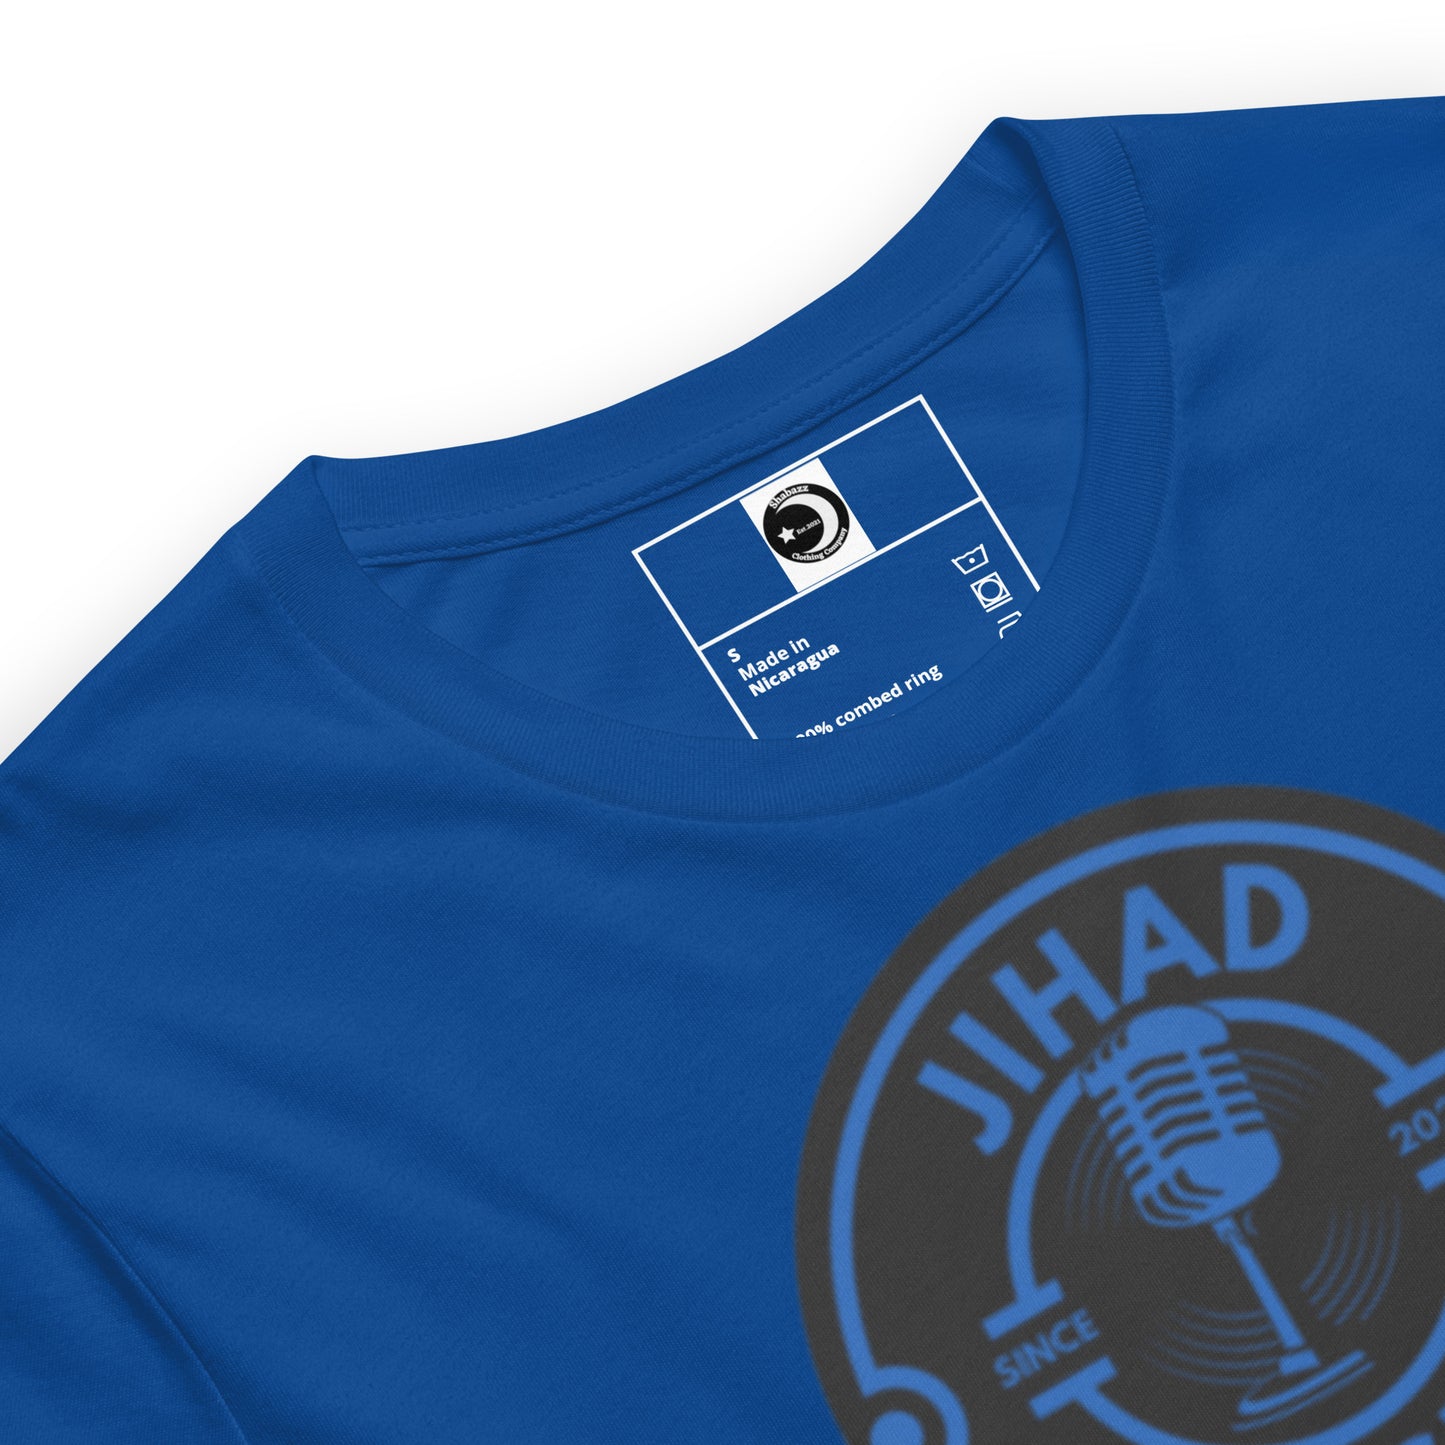 Jihad Music Unisex t-shirt